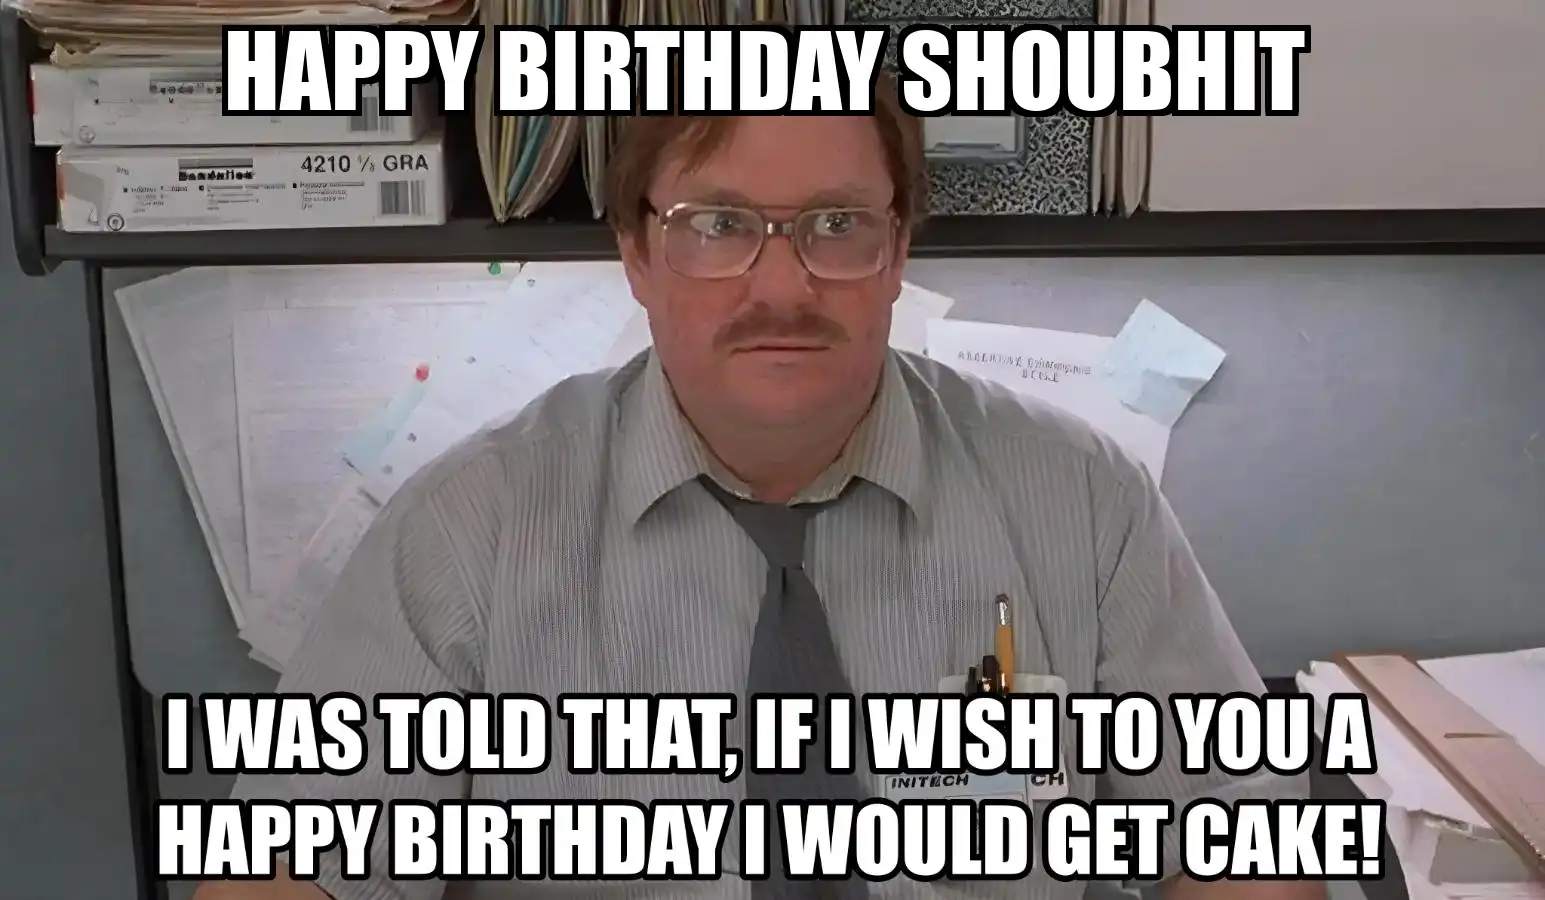 Happy Birthday Shoubhit I Would Get A Cake Meme